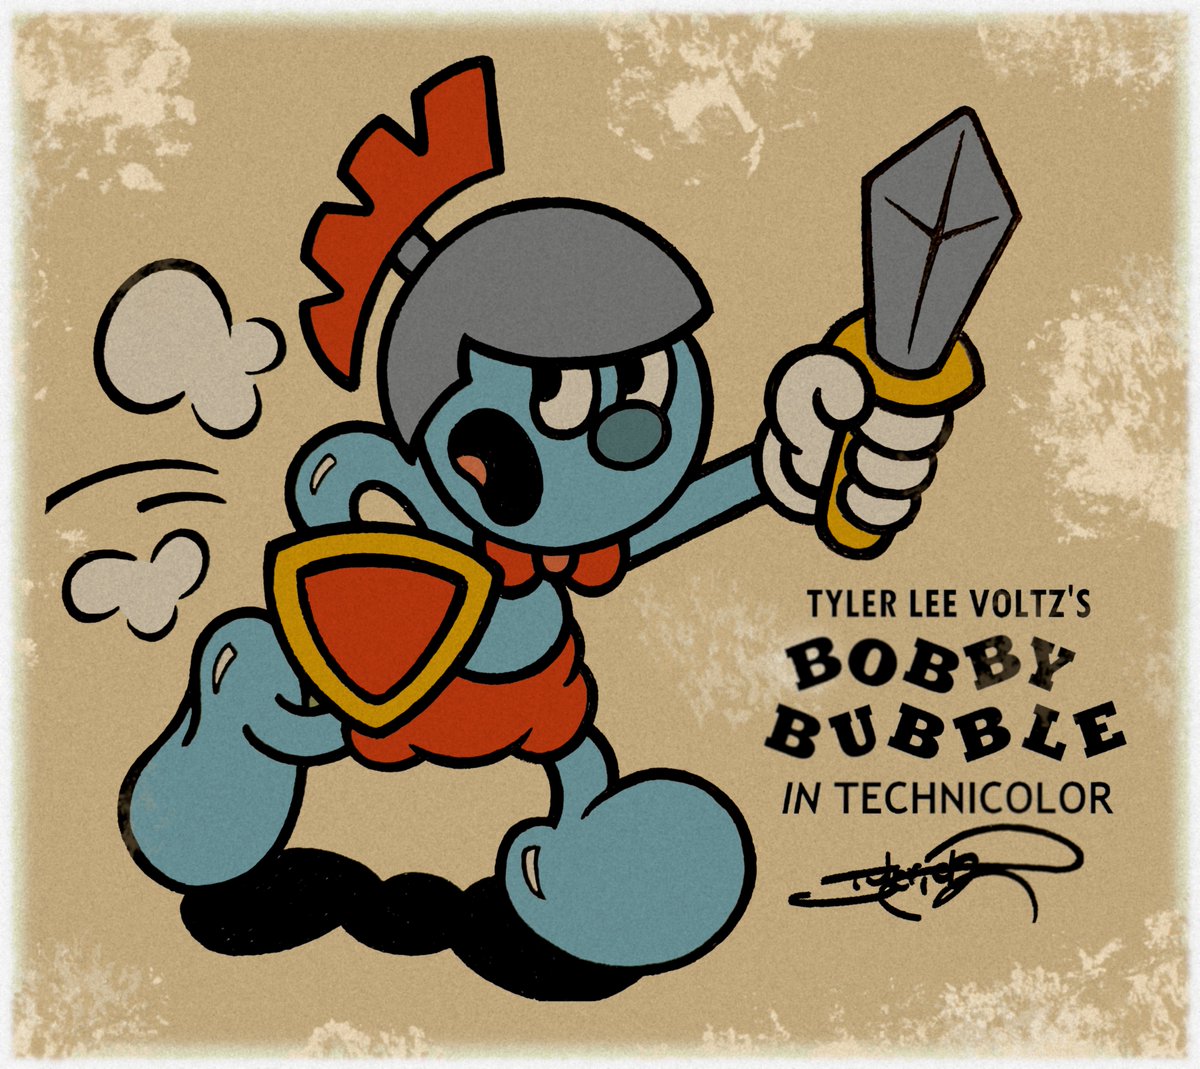 Squire Bobby is here to save the day! #RubberhoseStyle #Rubberhose #CartoonArt #cartoons #FelixTheCat #Cuphead #Mugman #animation #cartoon #comics #RubberhoseDrawingStyle